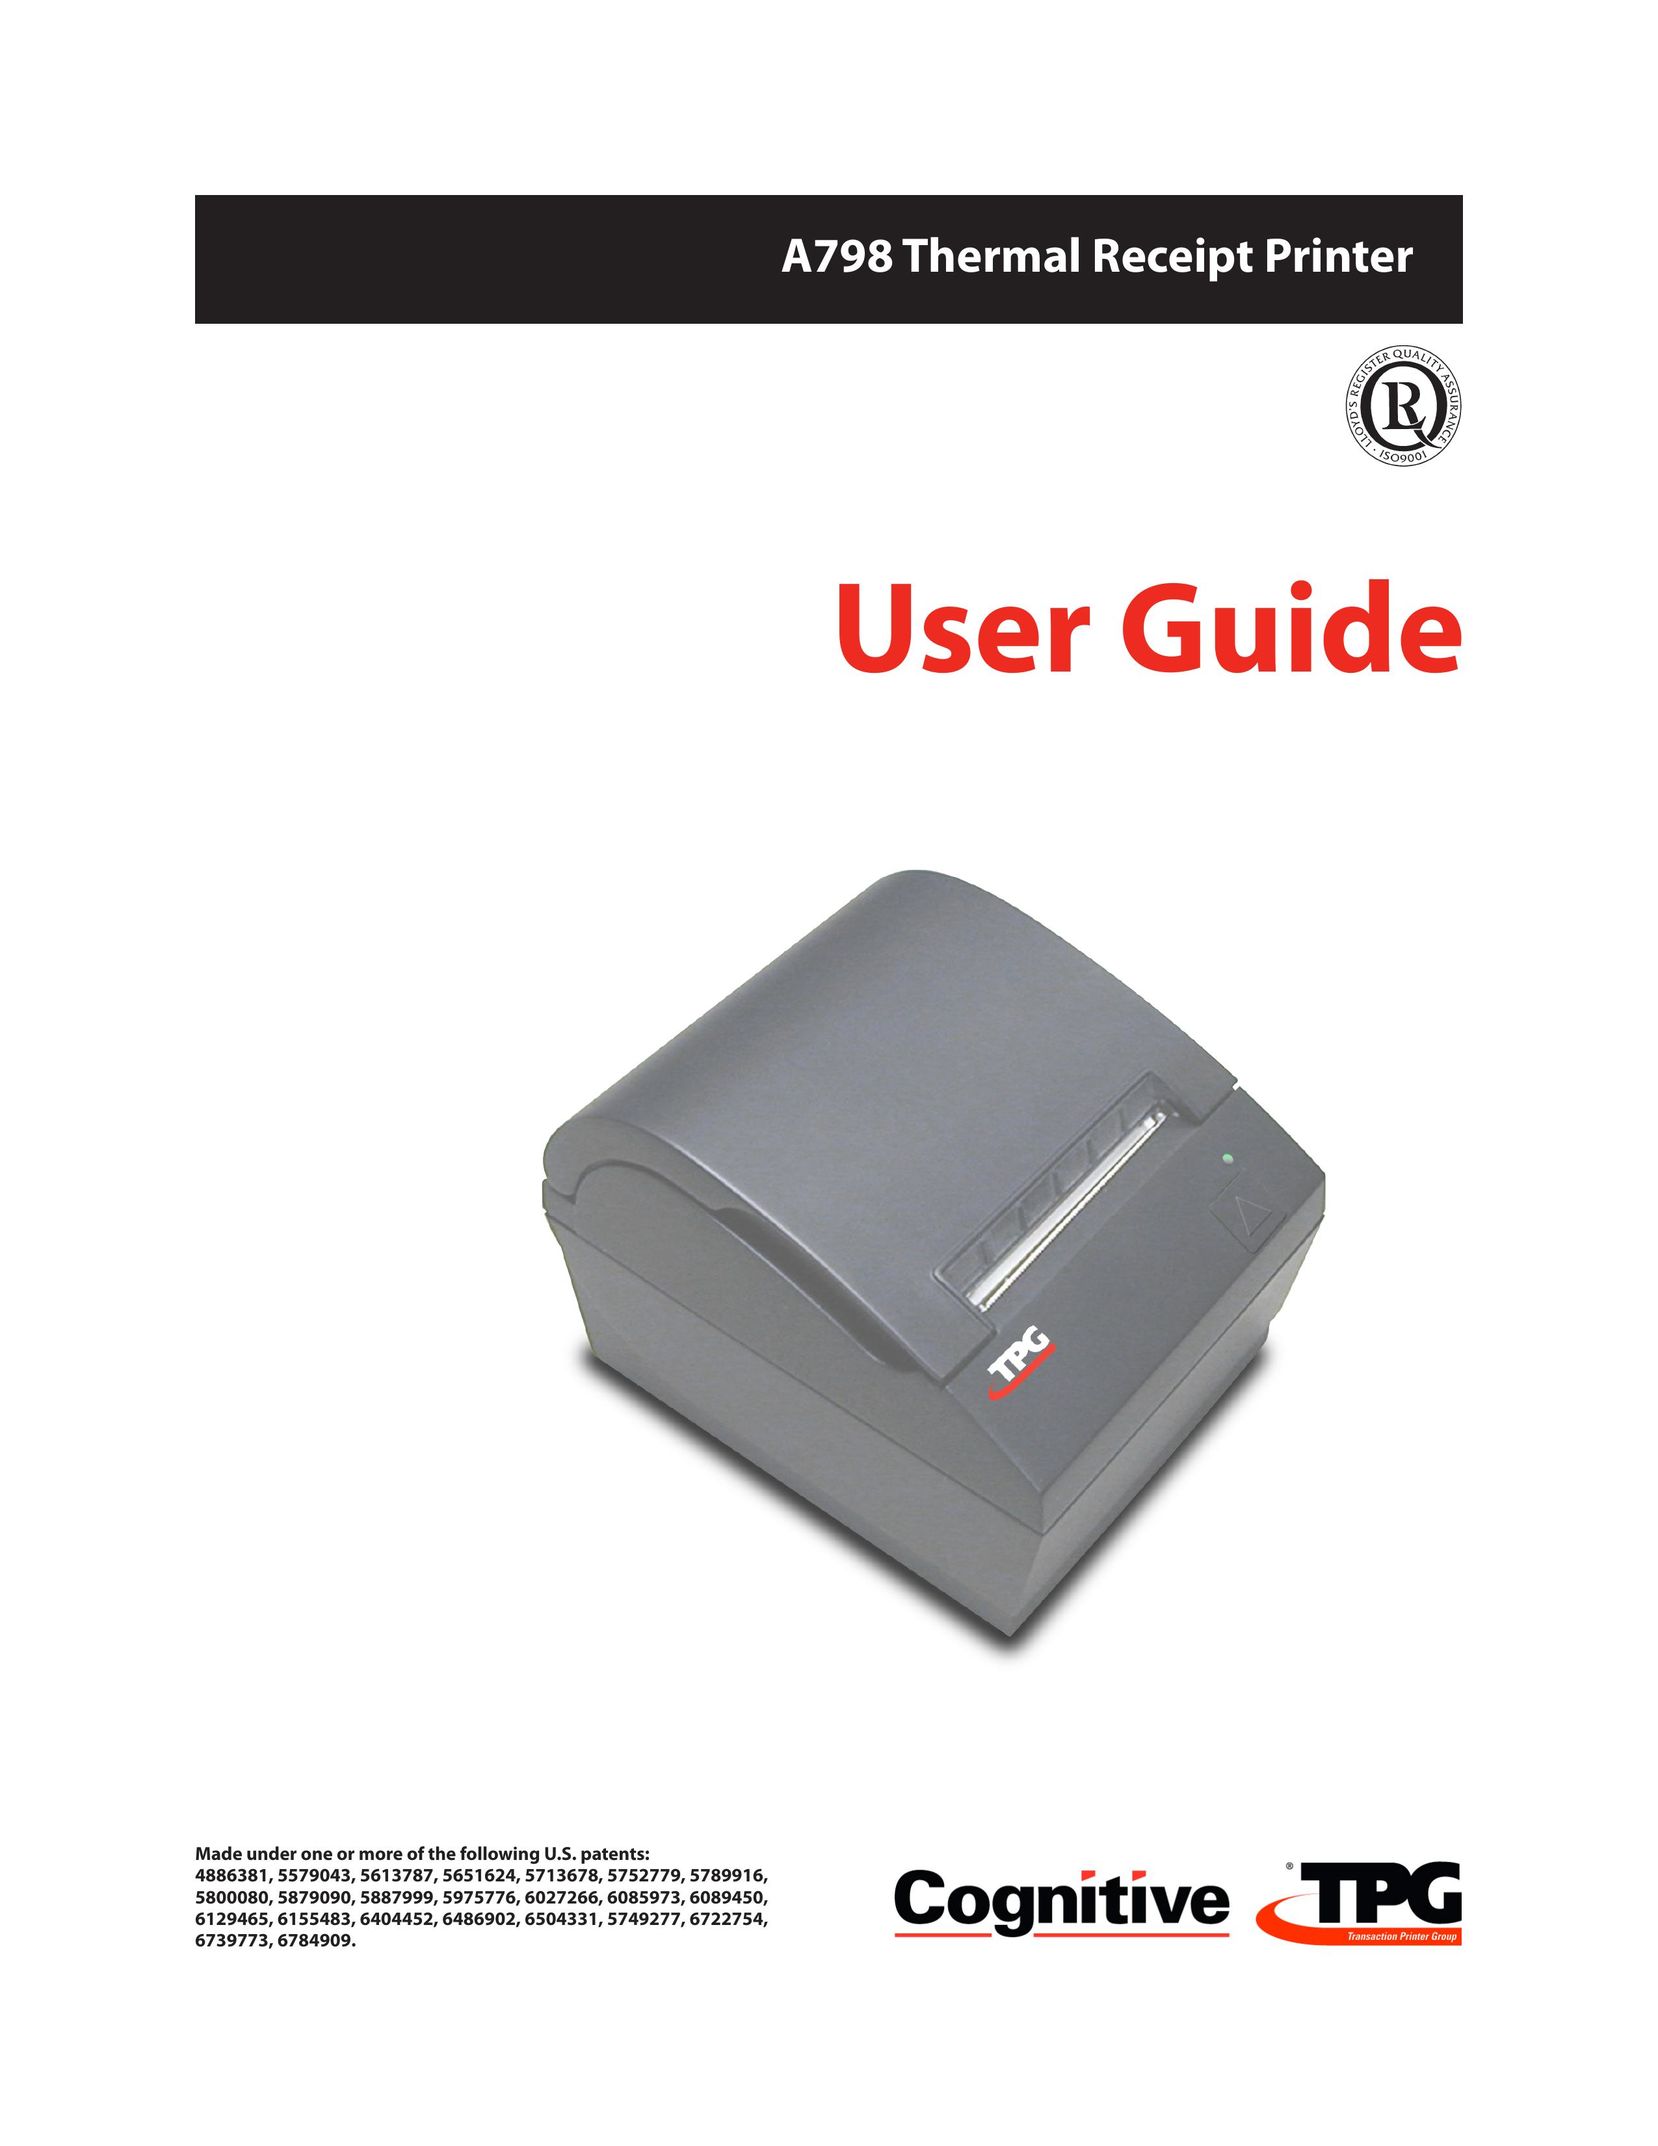 Cognitive Solutions 5800080 Scanner User Manual